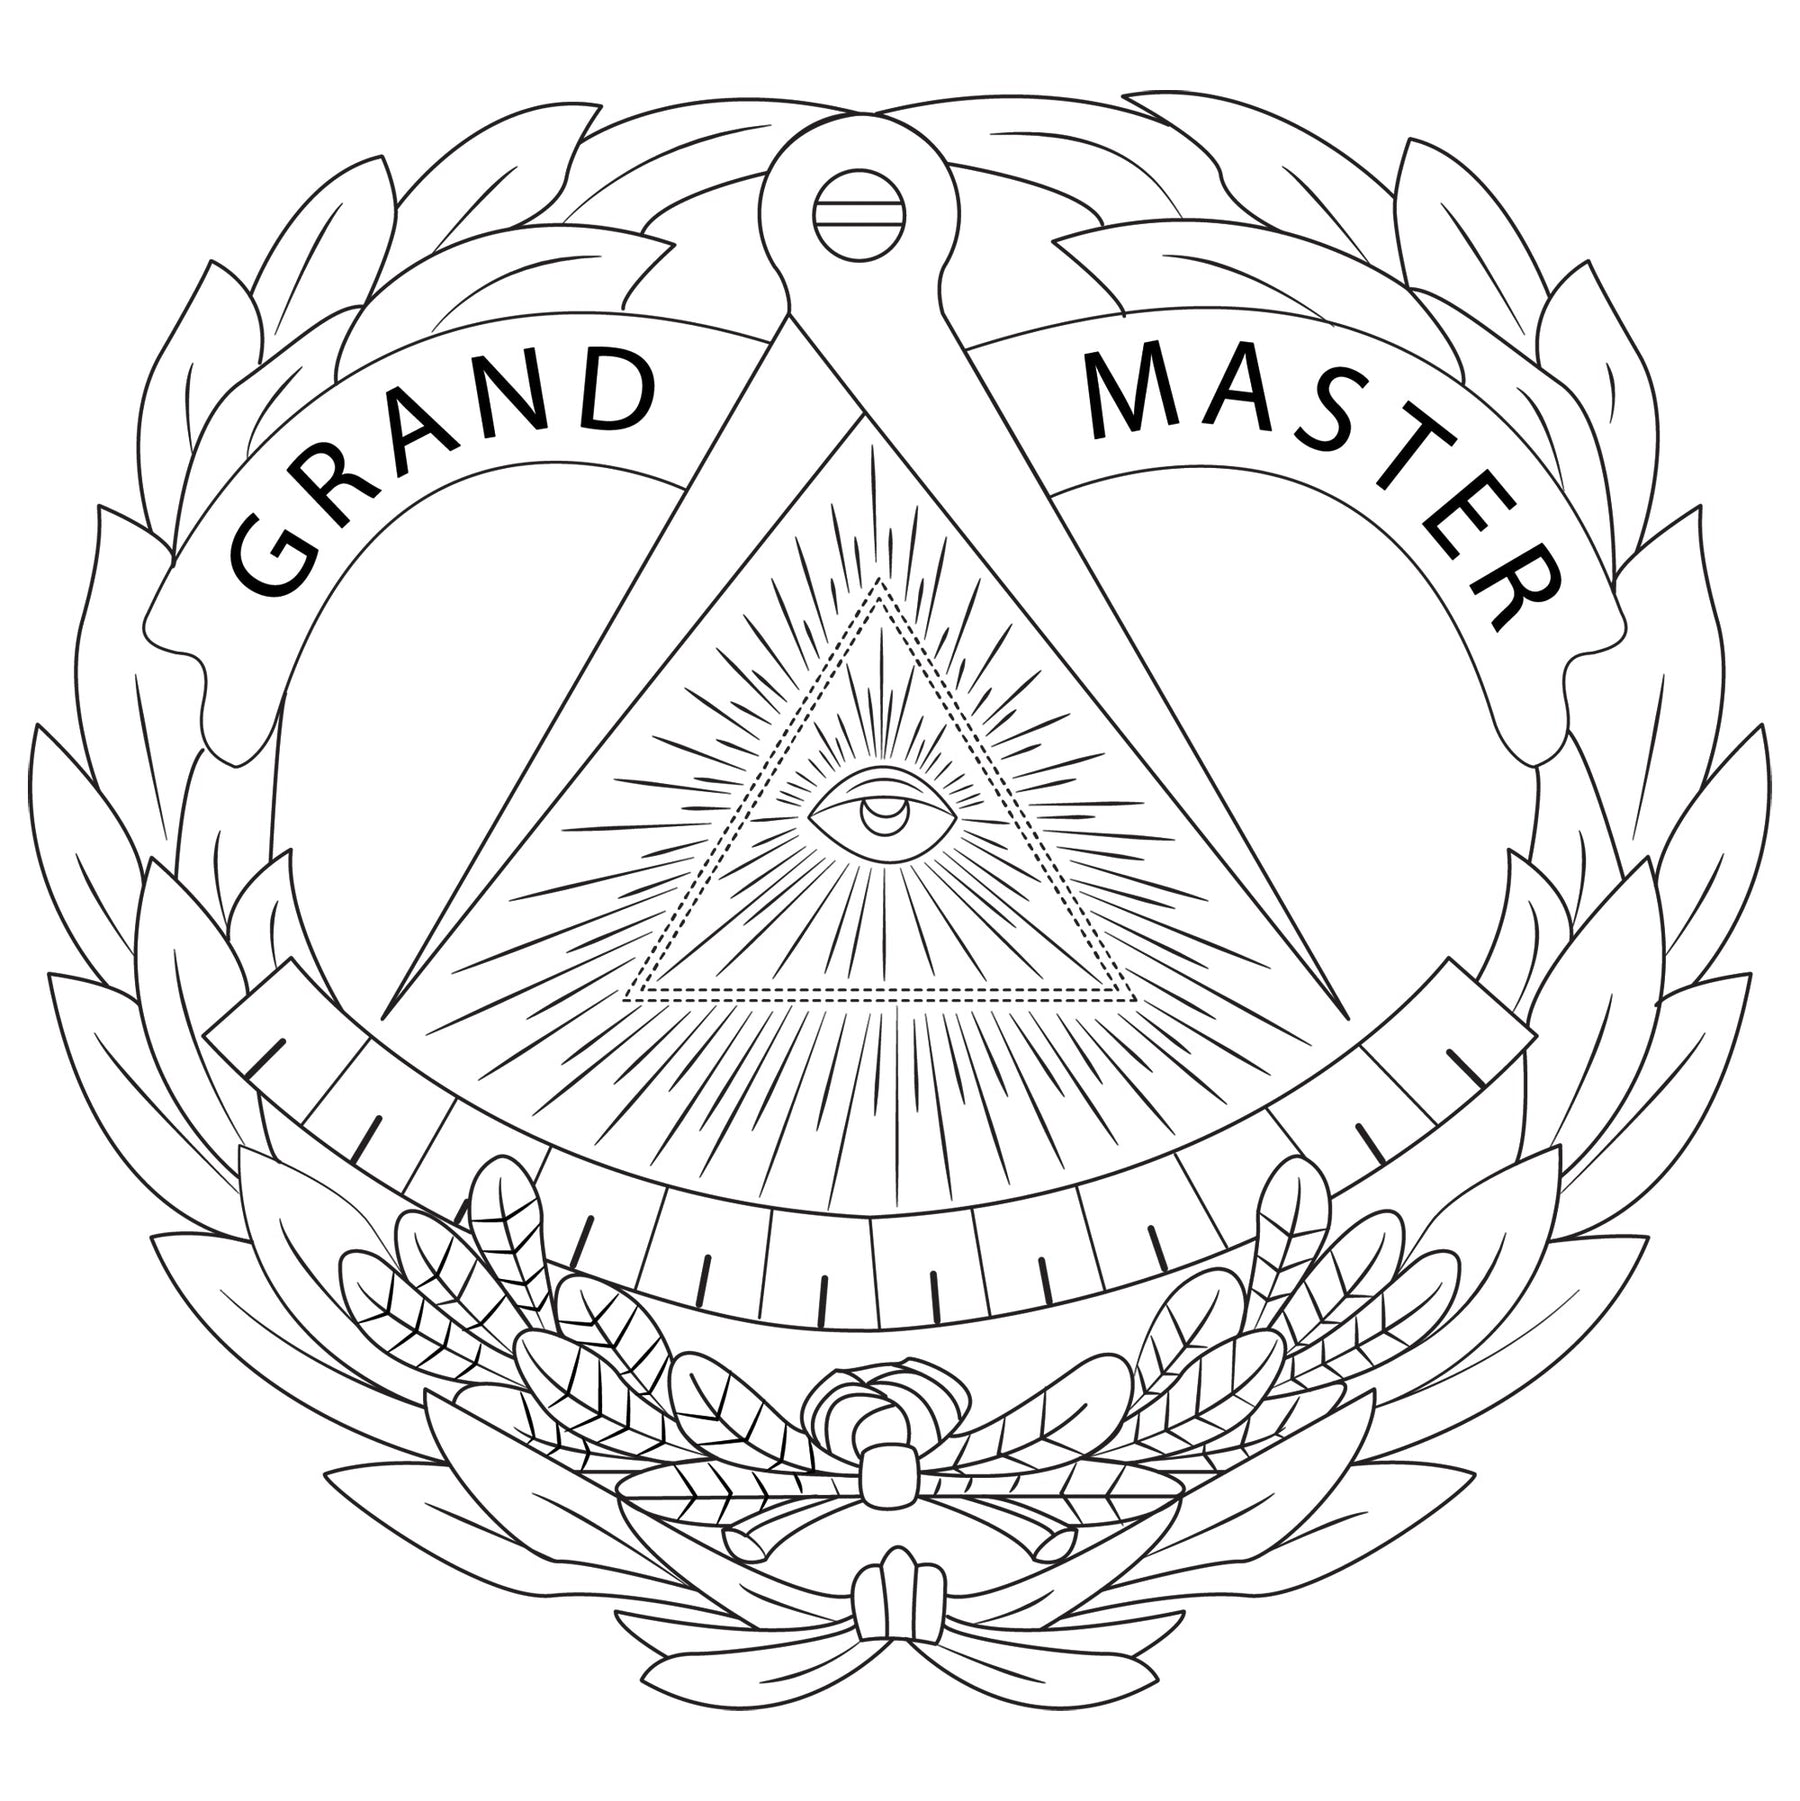 Grand Master Blue Lodge Chess Set - Hand Workmanship Patterns - Bricks Masons